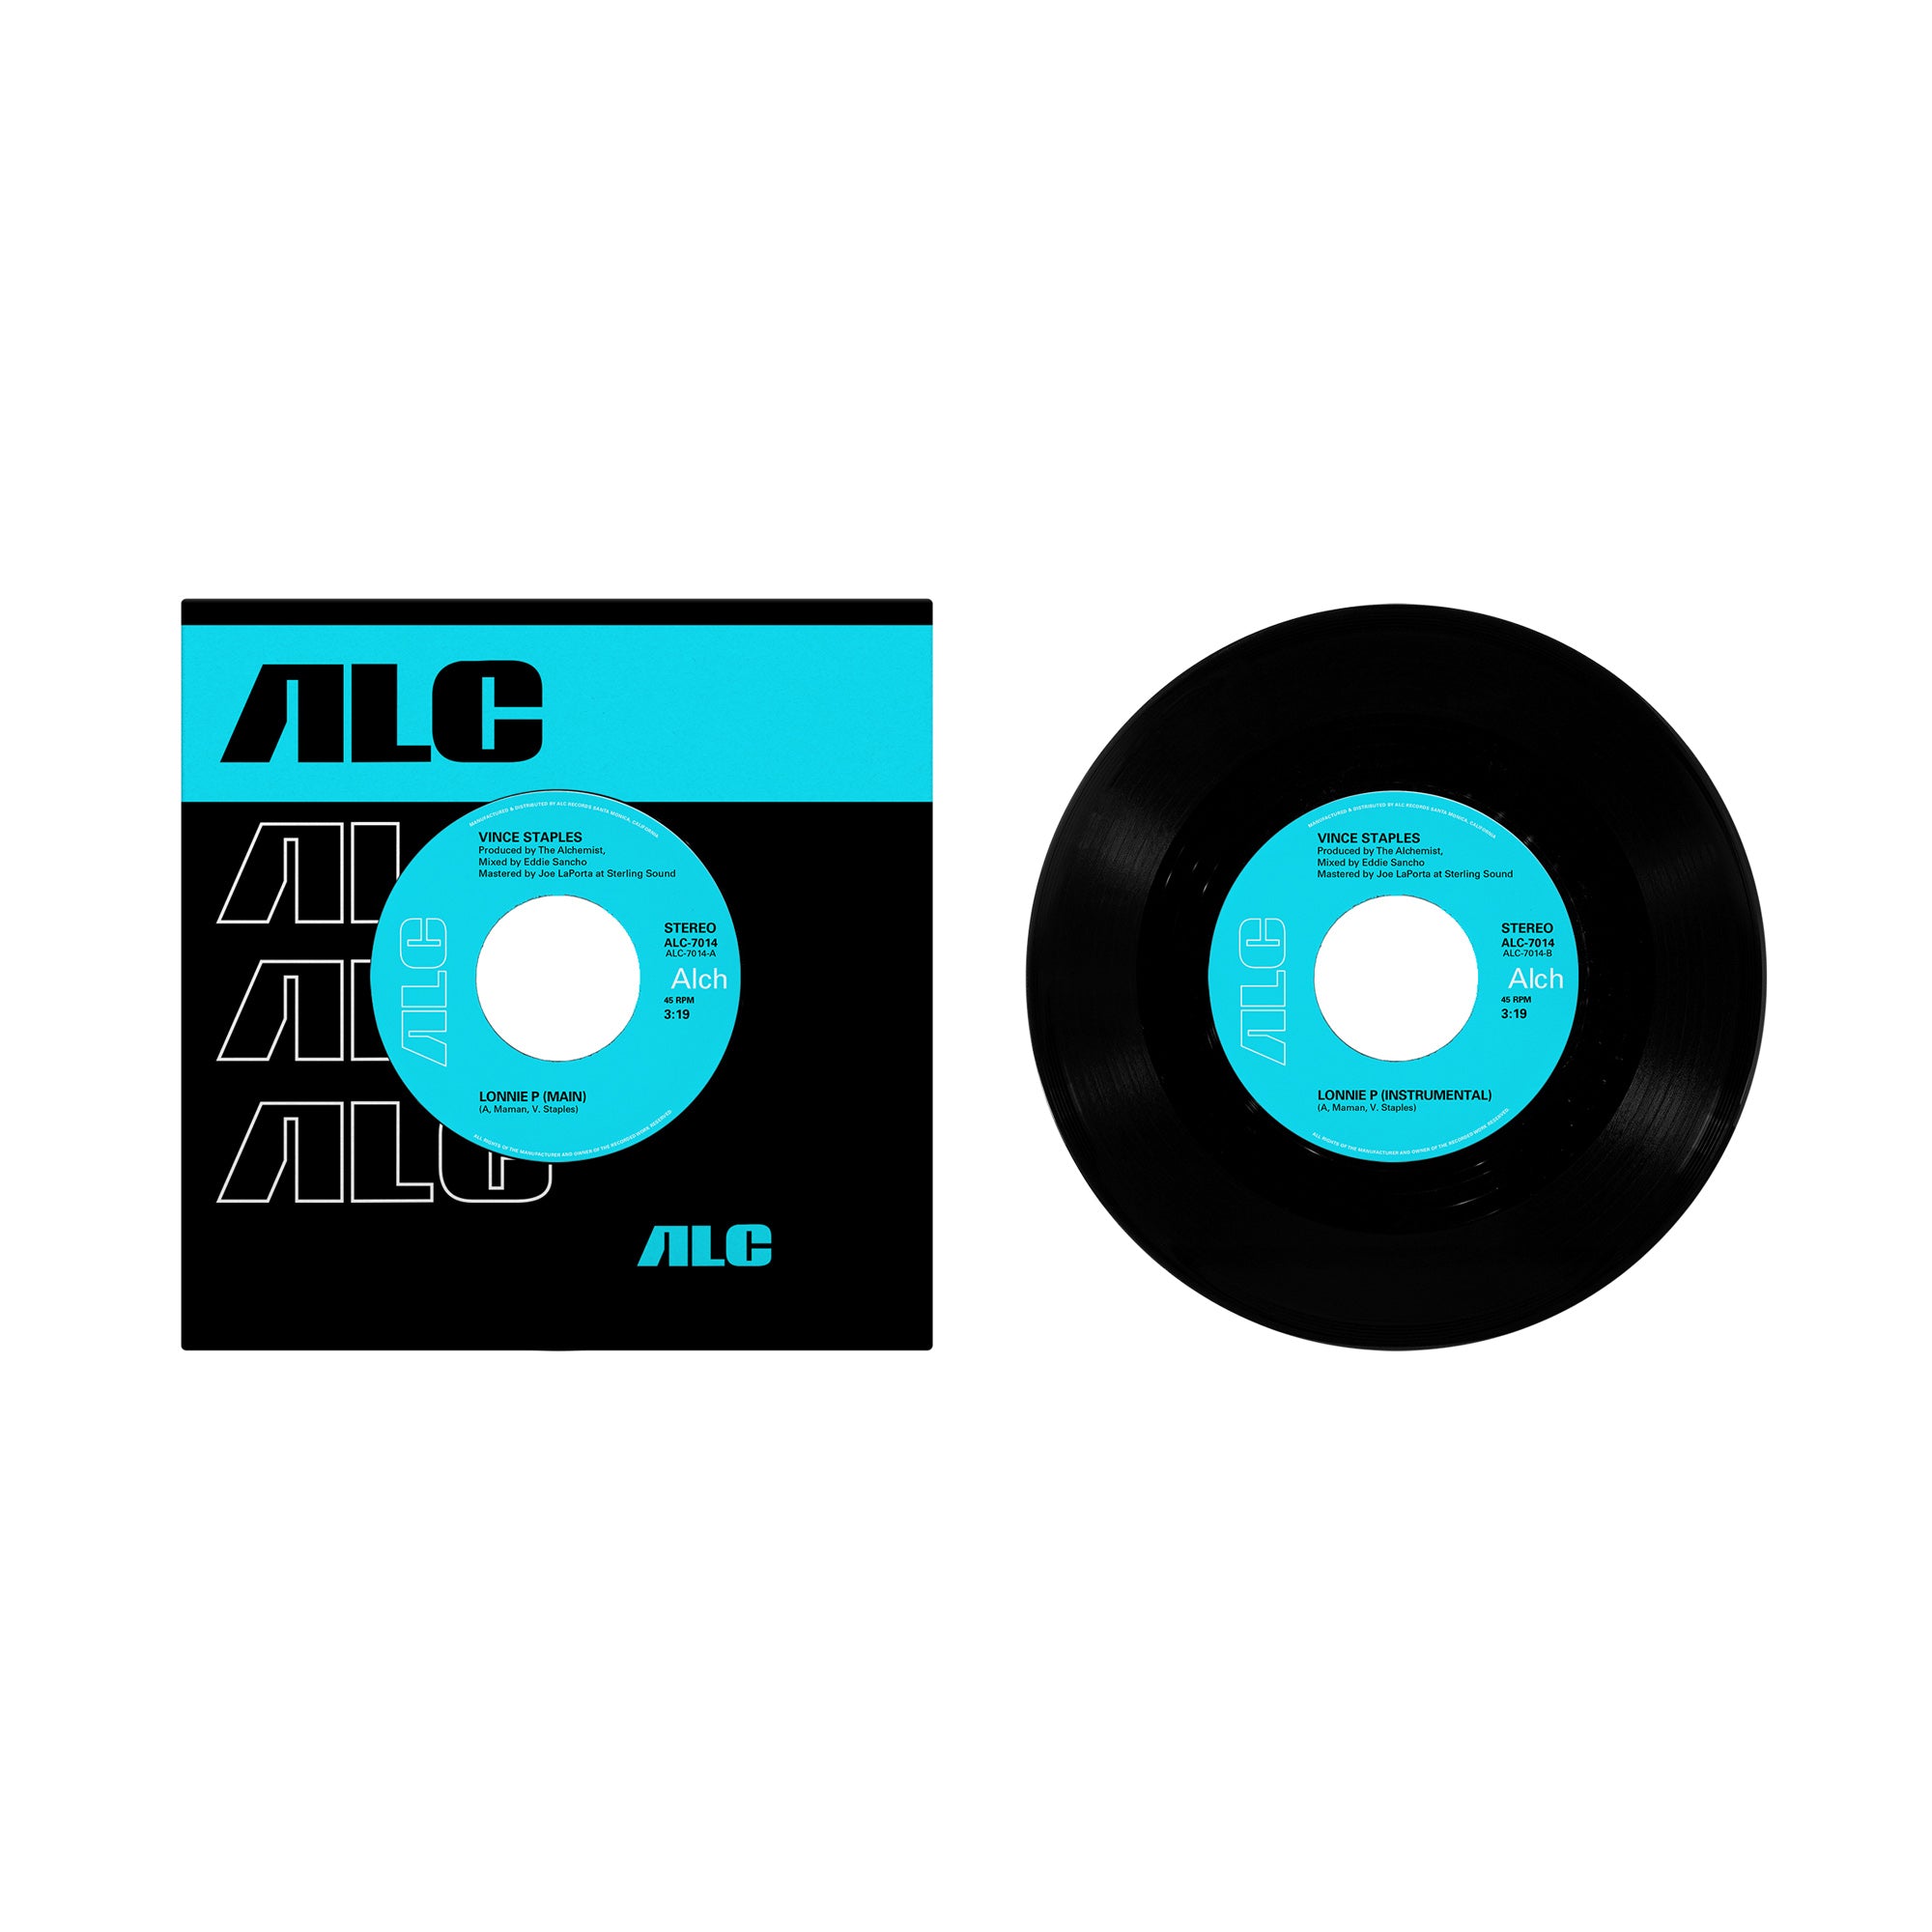 Lonnie P b/w Instrumental (7" Vinyl)